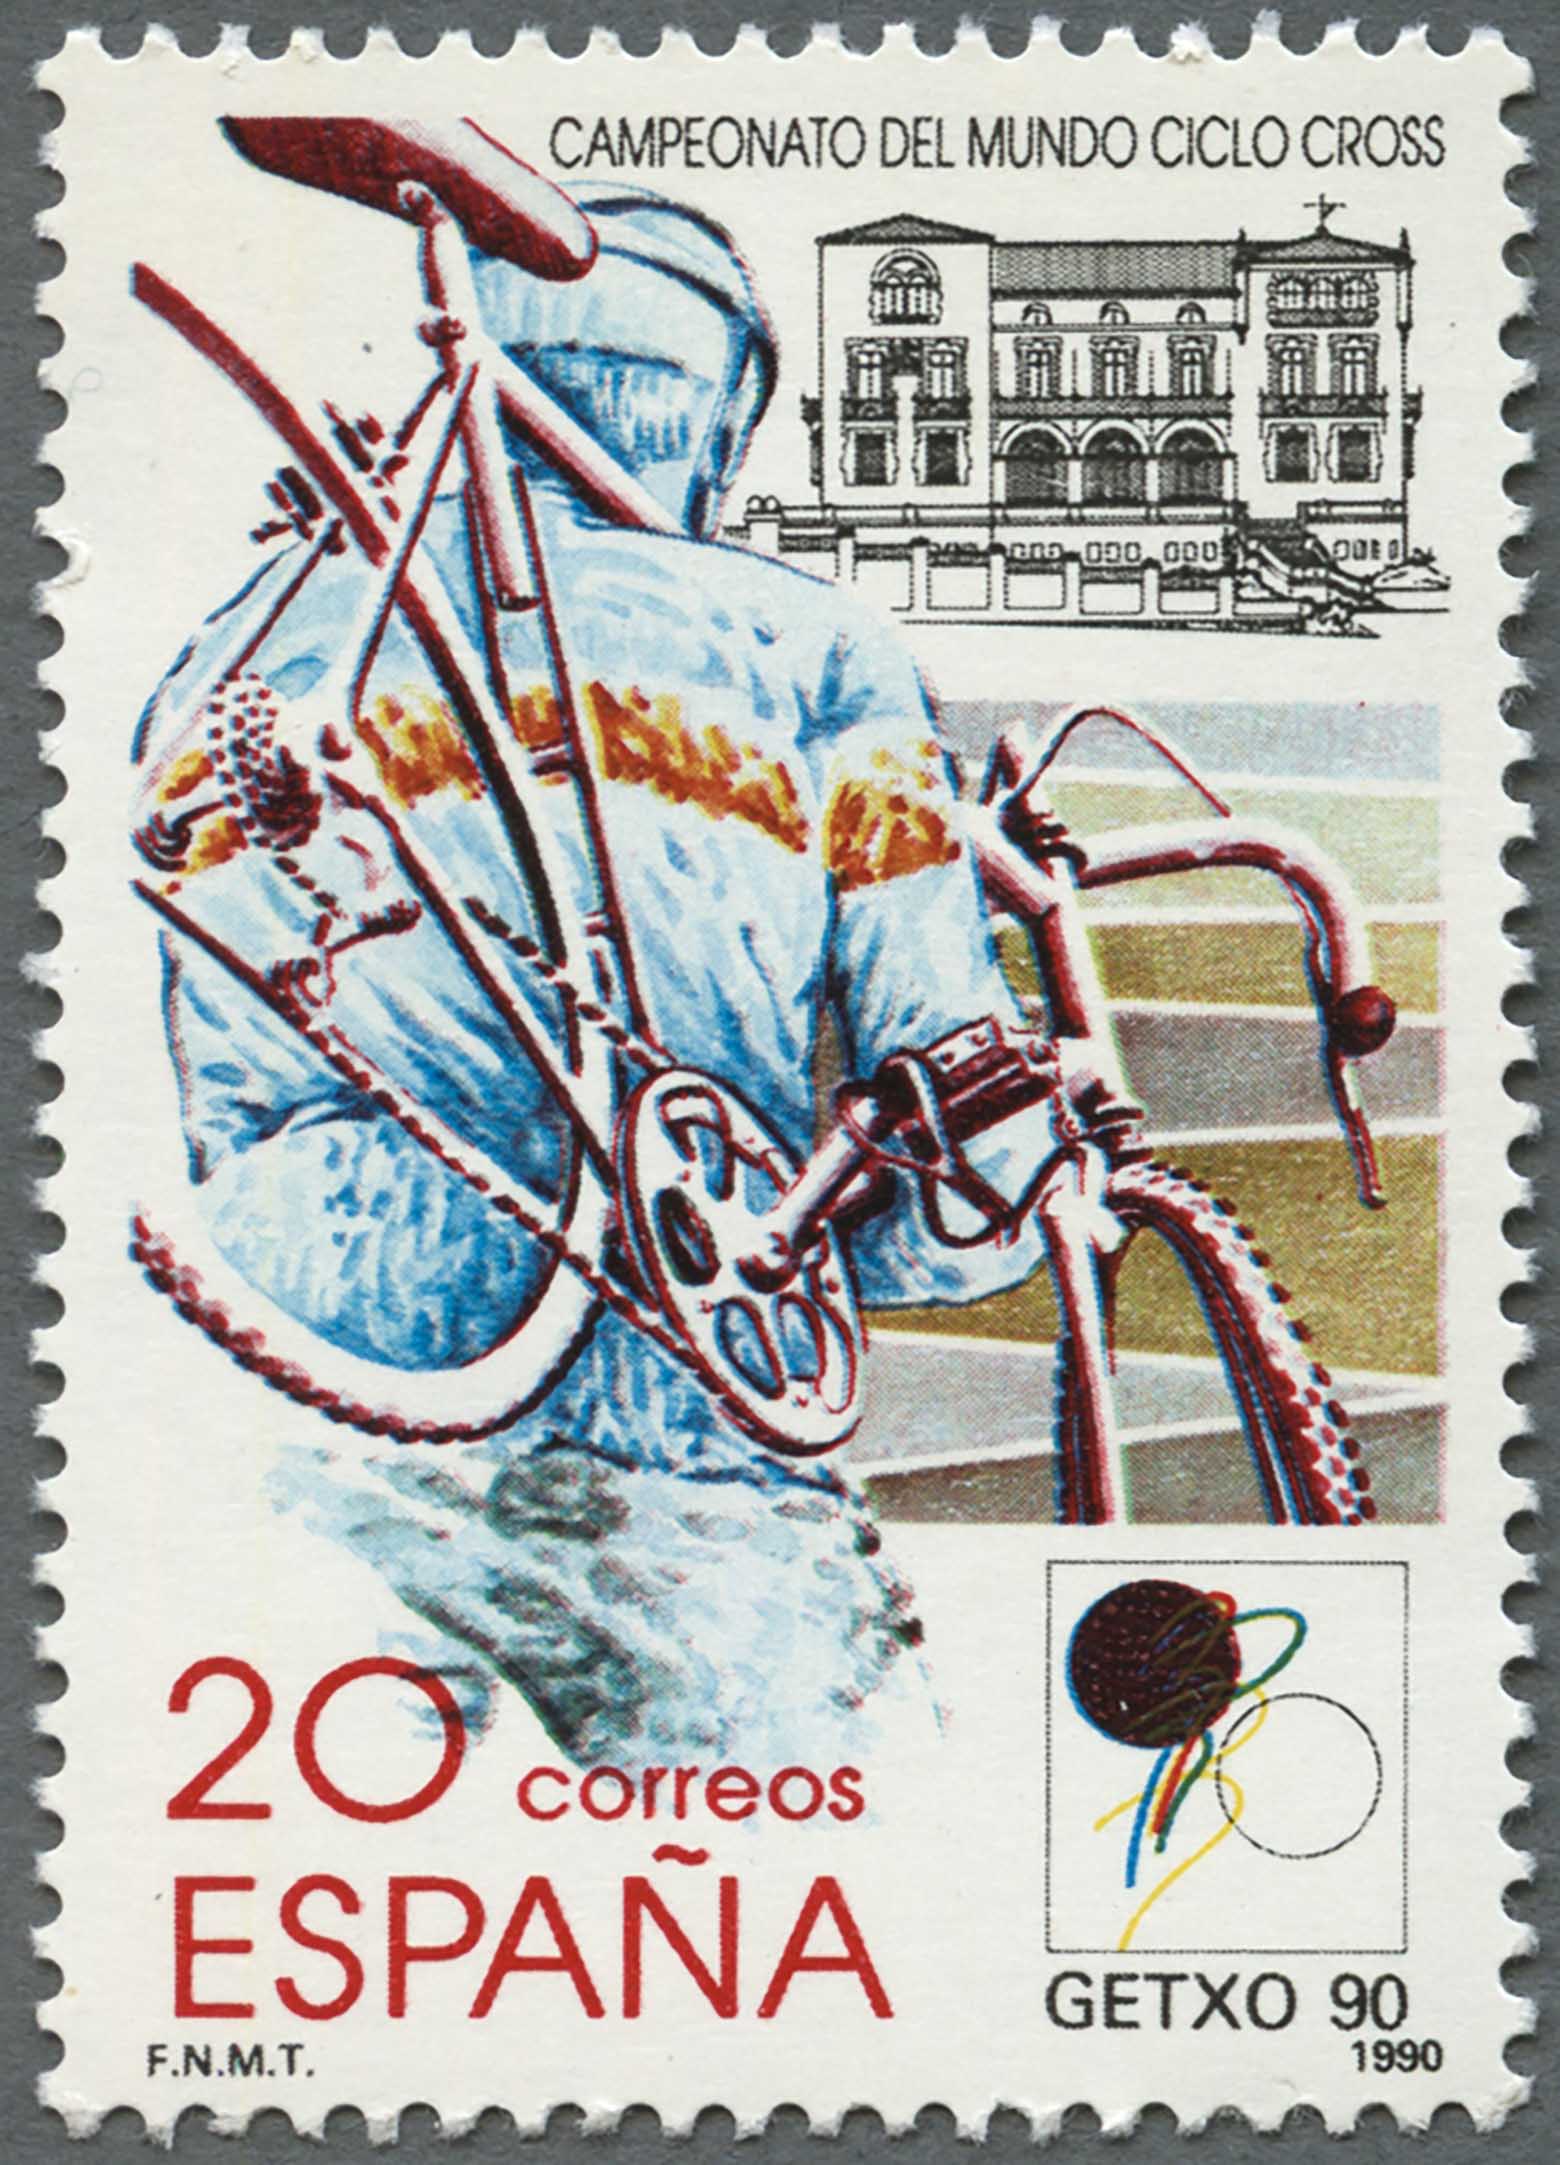 Correos - GETXO 90 stamp main image